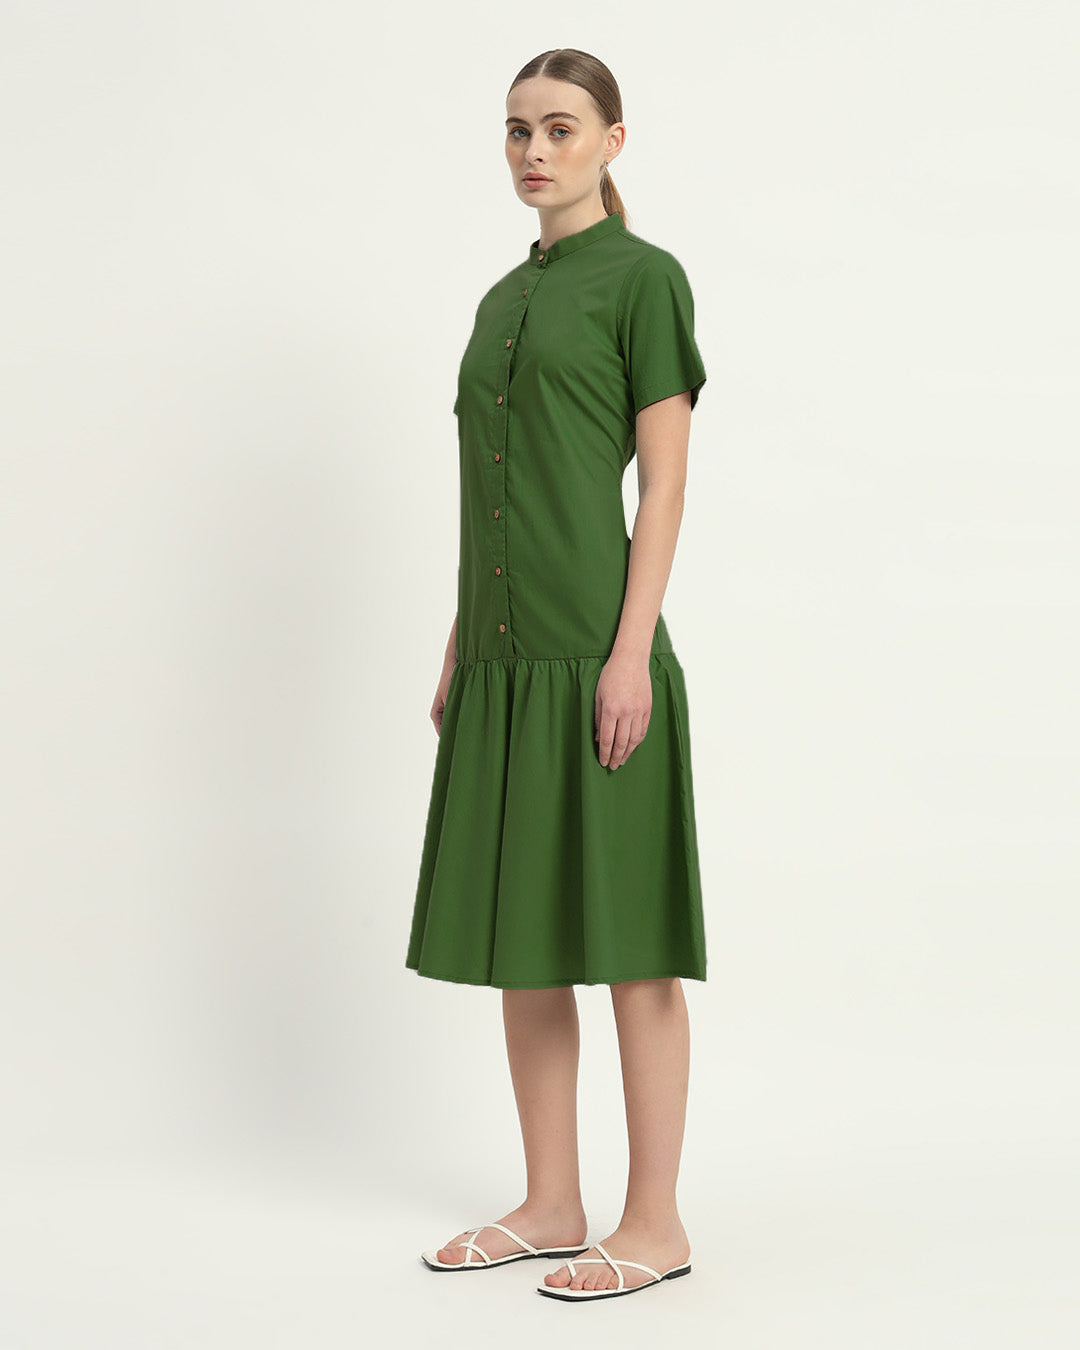 The Emerald Melrose Cotton Dress